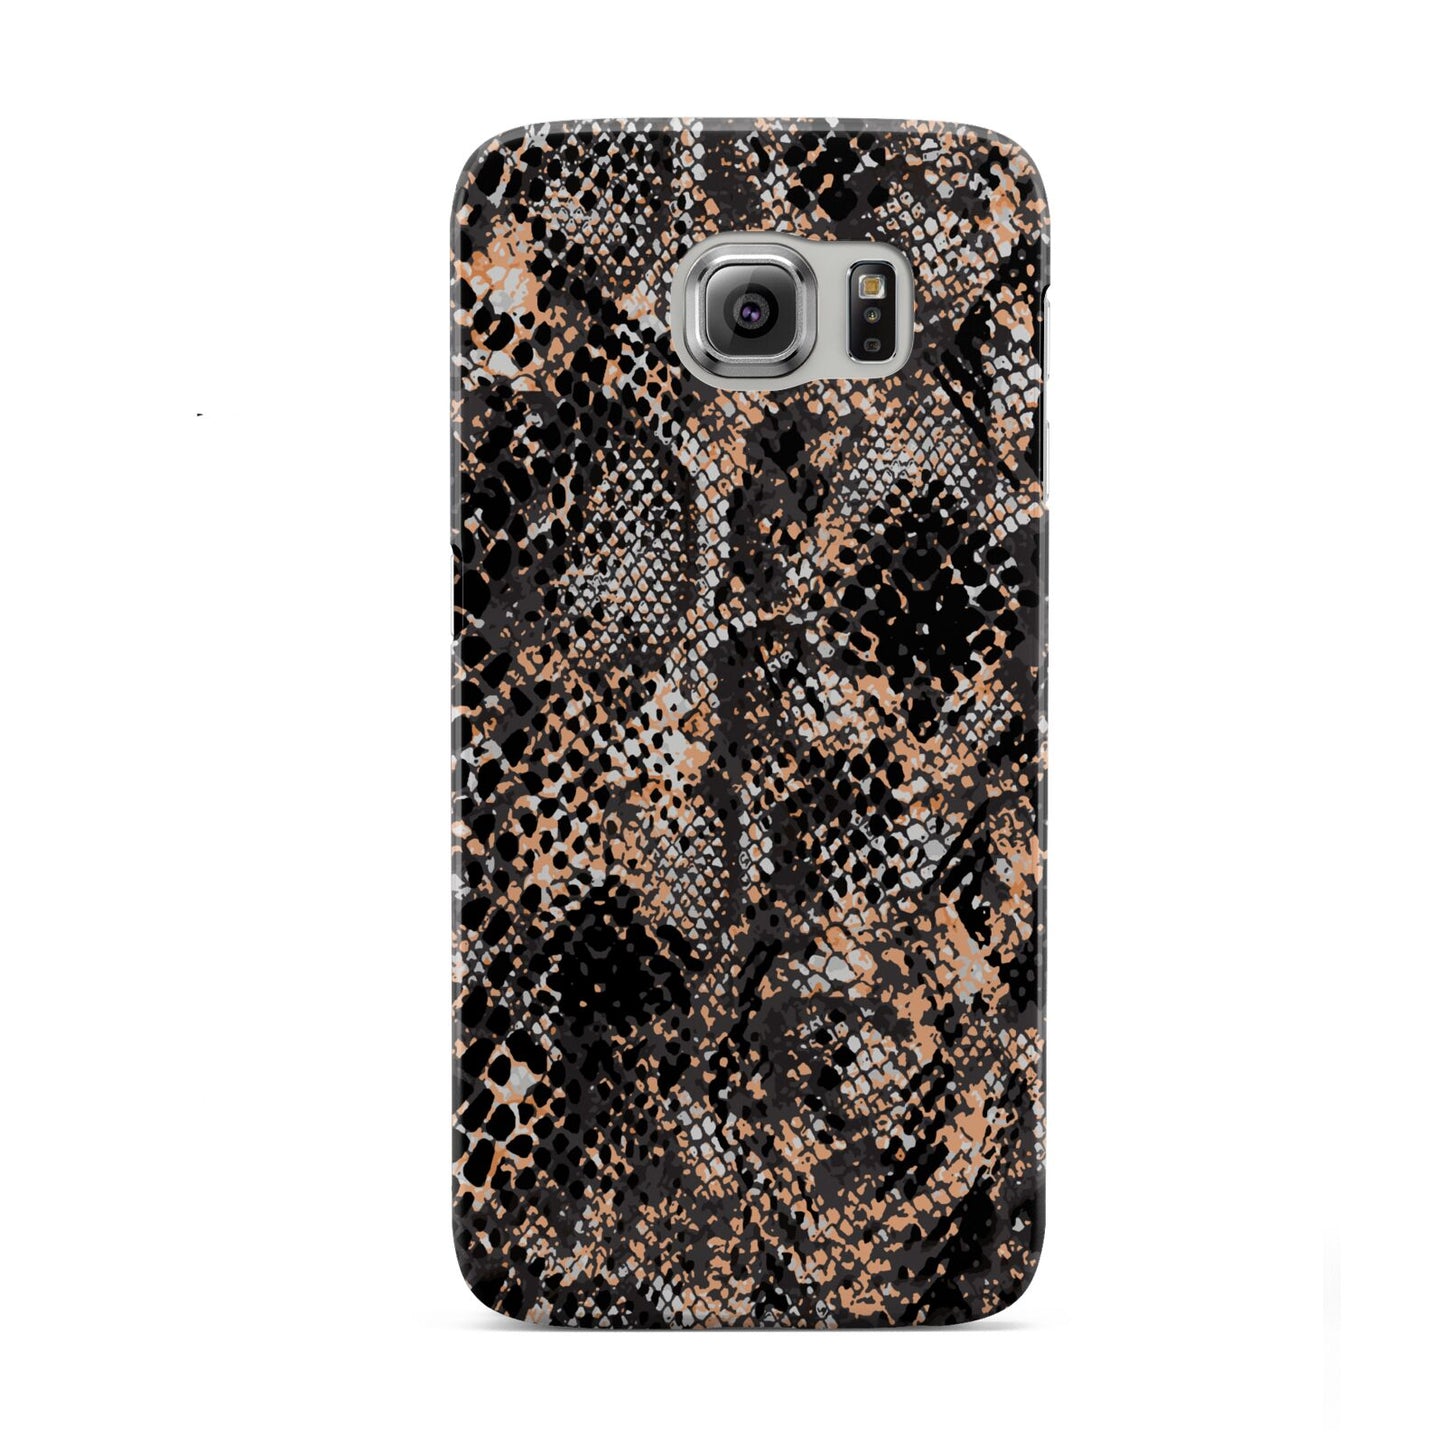 Snakeskin Print Samsung Galaxy S6 Case